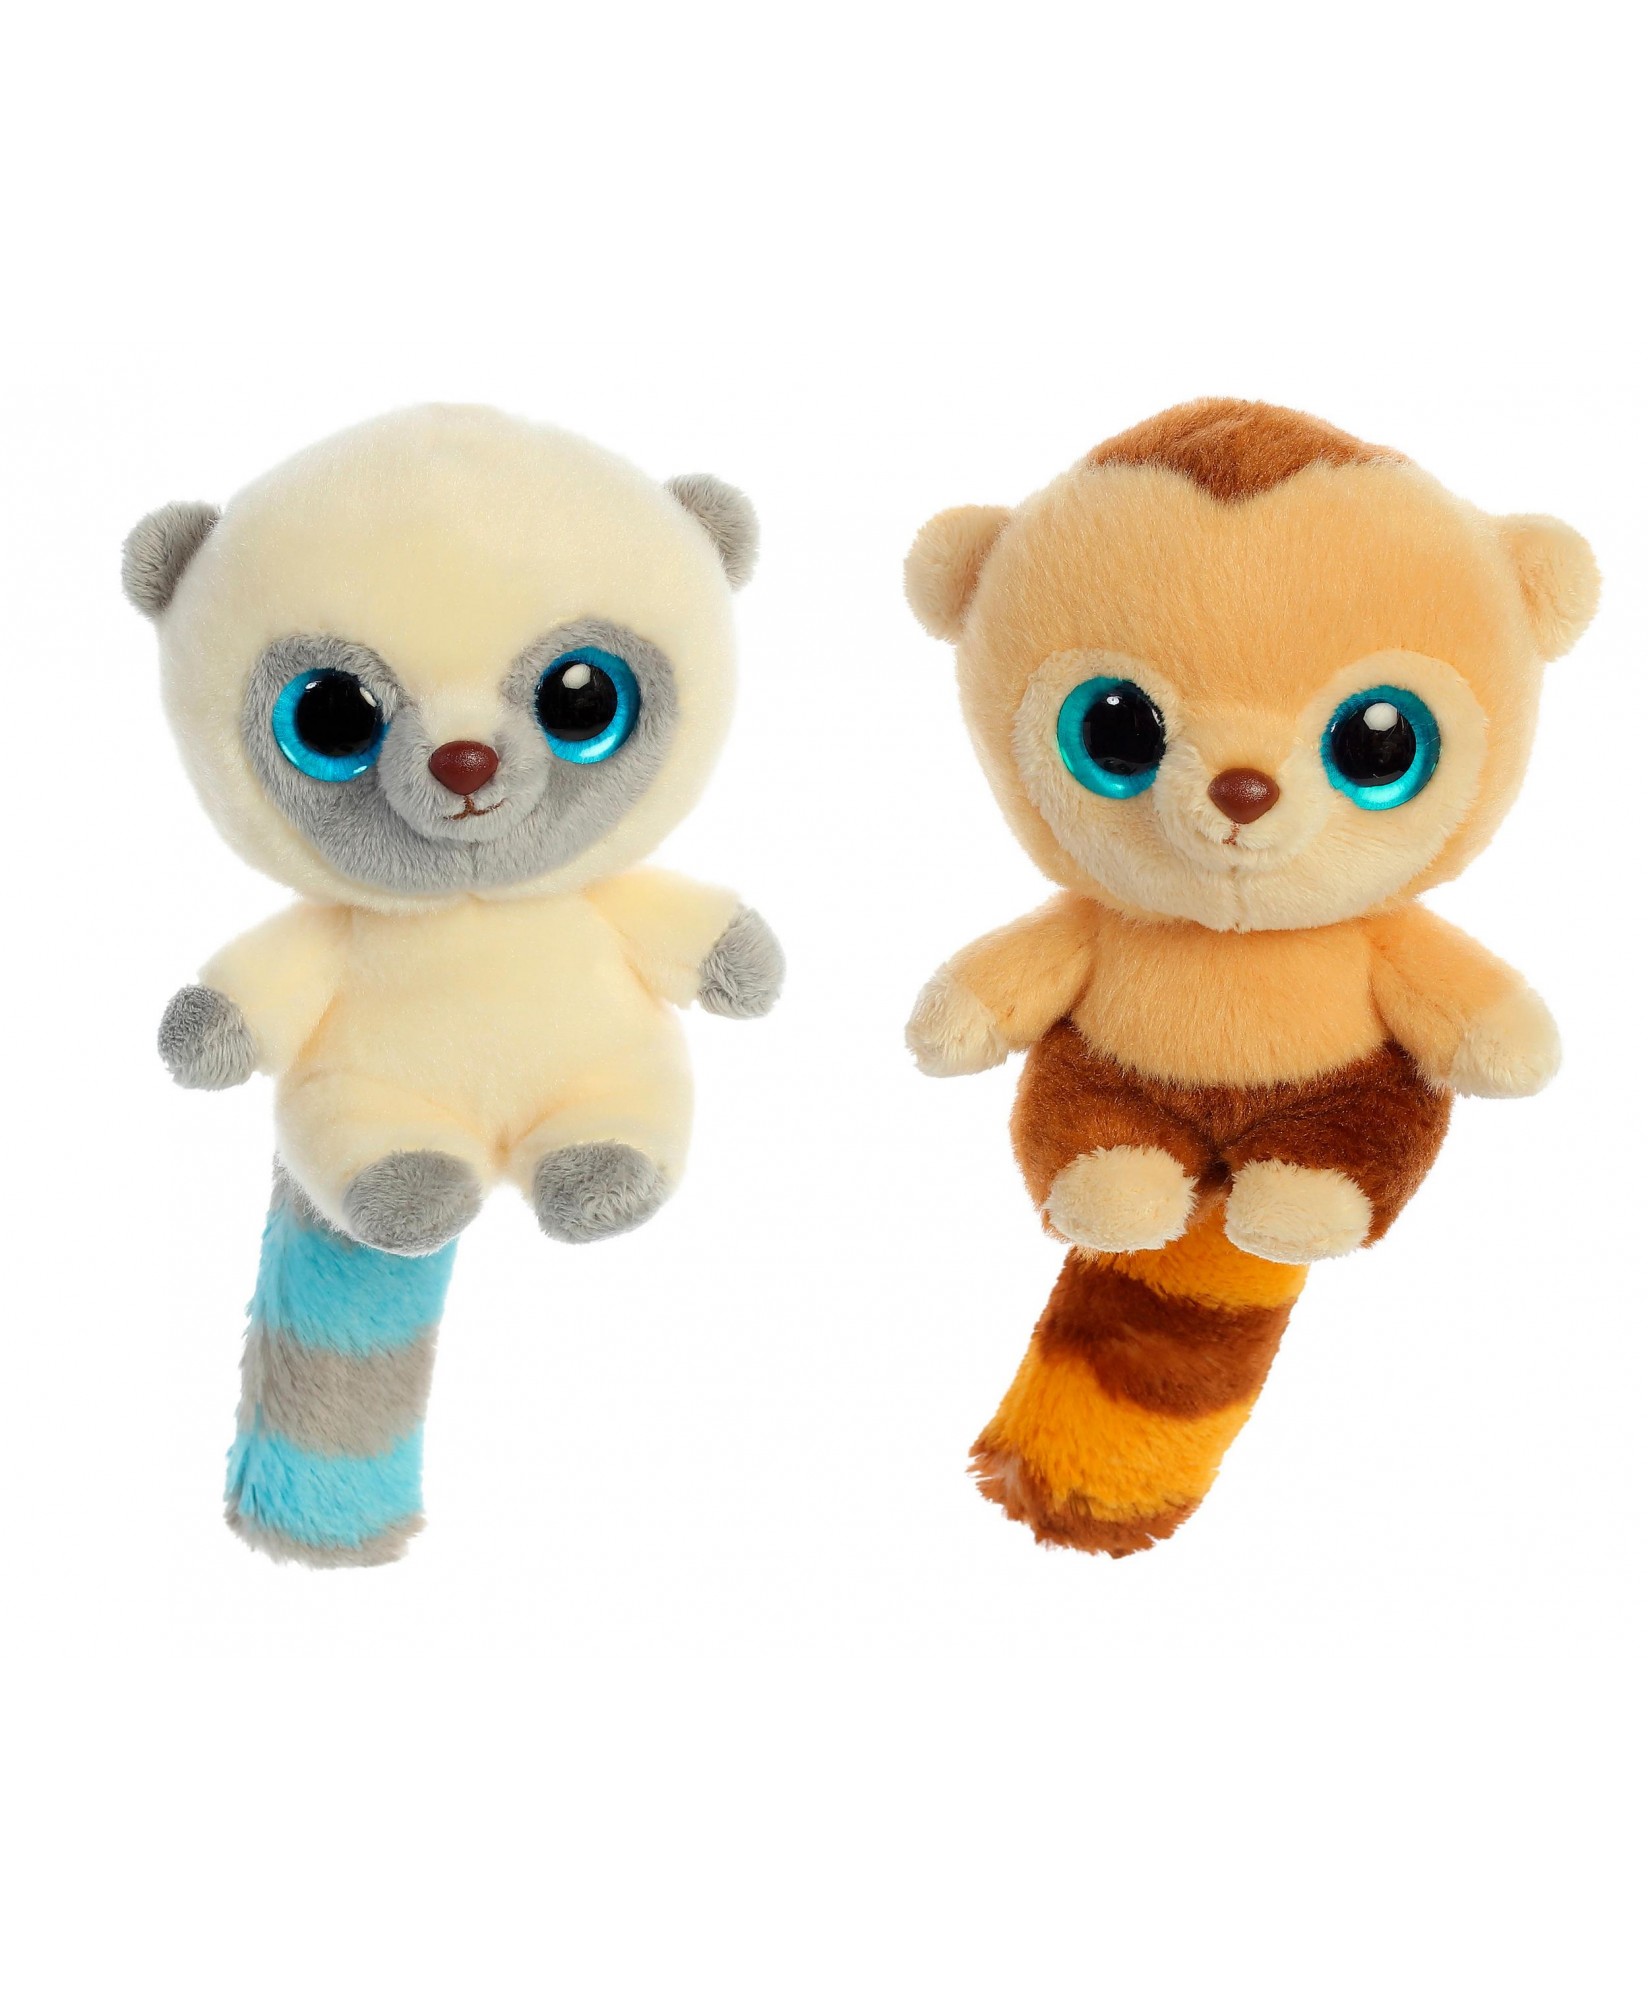 Aurora Yoohoo Mini Roodee mono capuchino 3" 61268-Nuevo Y Original 